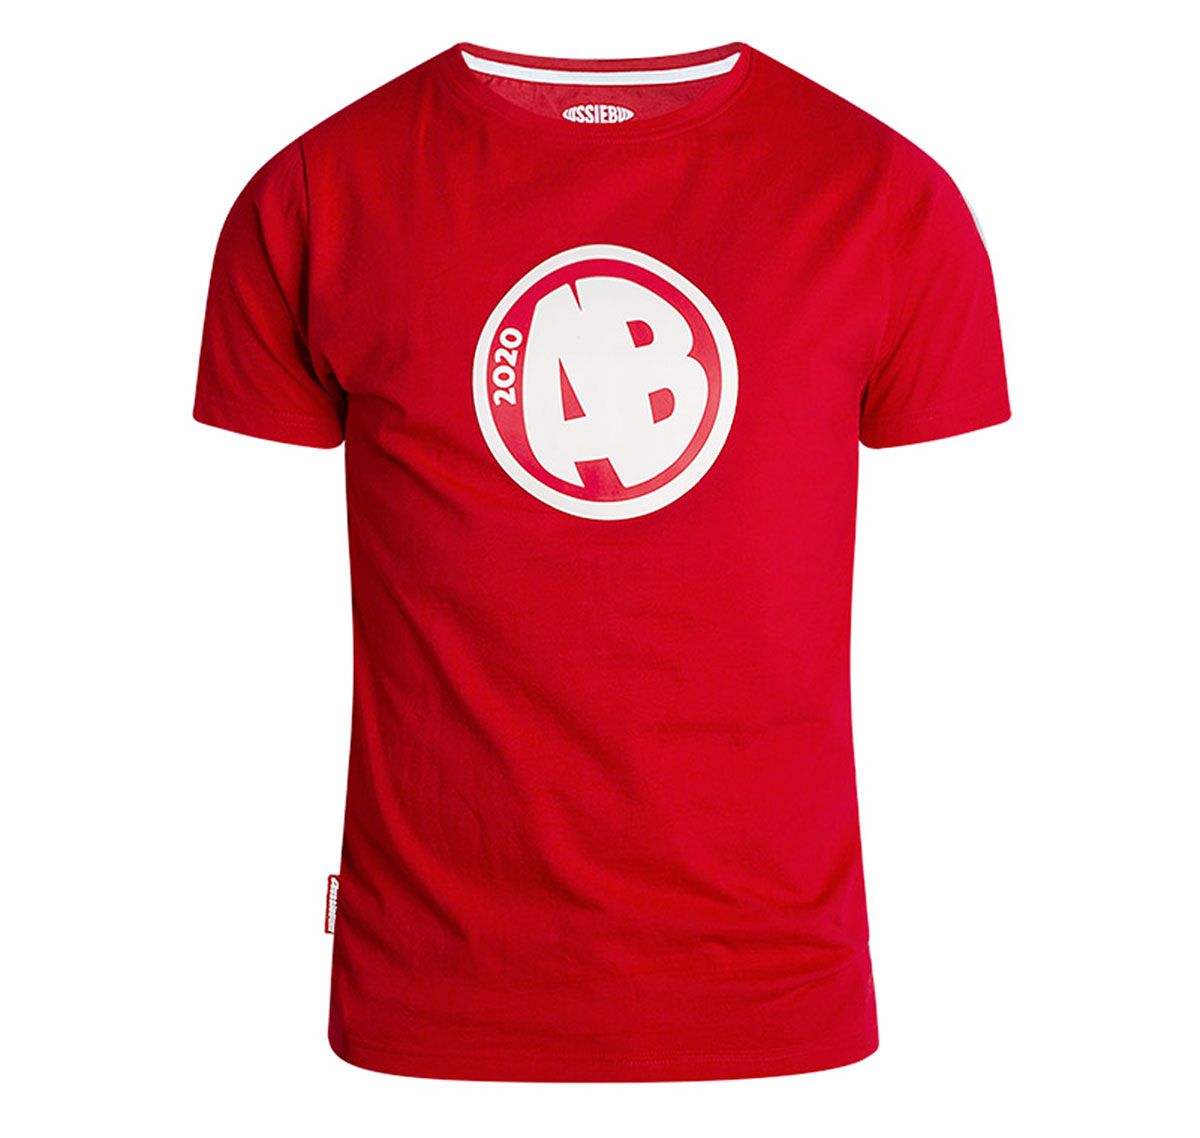 aussieBum T-Shirt DESIGNER TEE AB, rouge